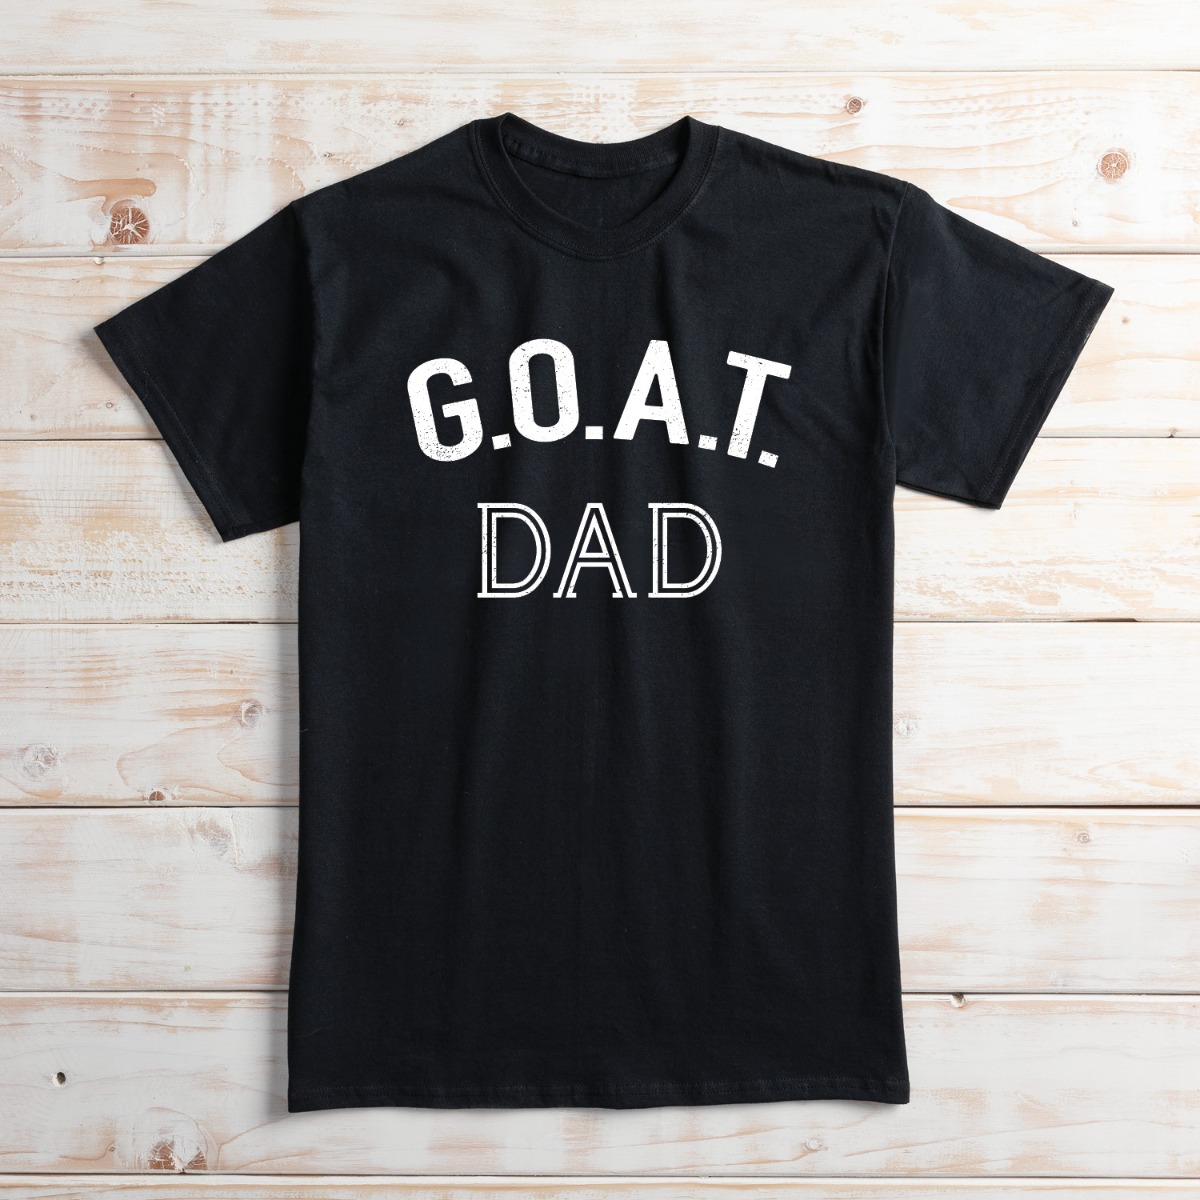 G.O.A.T. Dad Black Adult T-Shirt